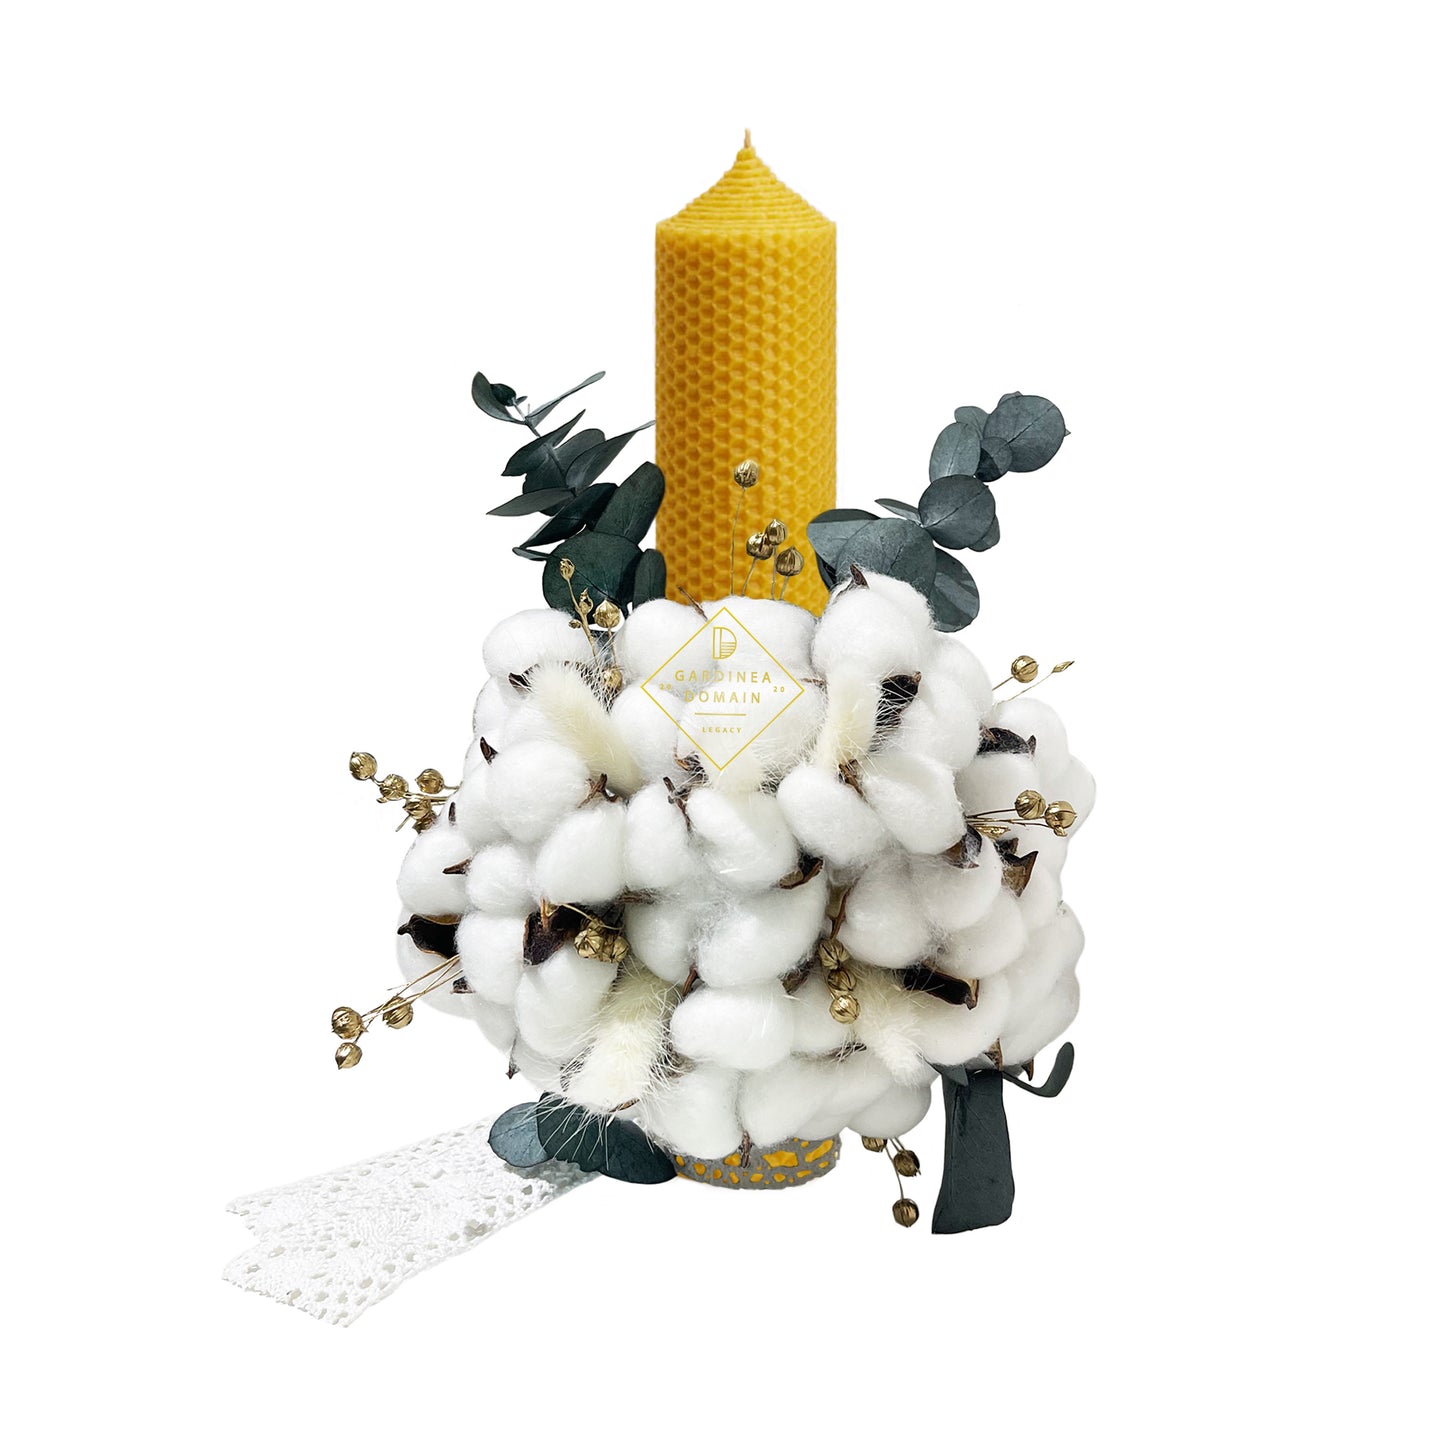 Lumanare de botez Gardinea Domain® galben din ceara naturala de albine, cu bumbac si flori naturale stabilizate, personalizata, decor dantela